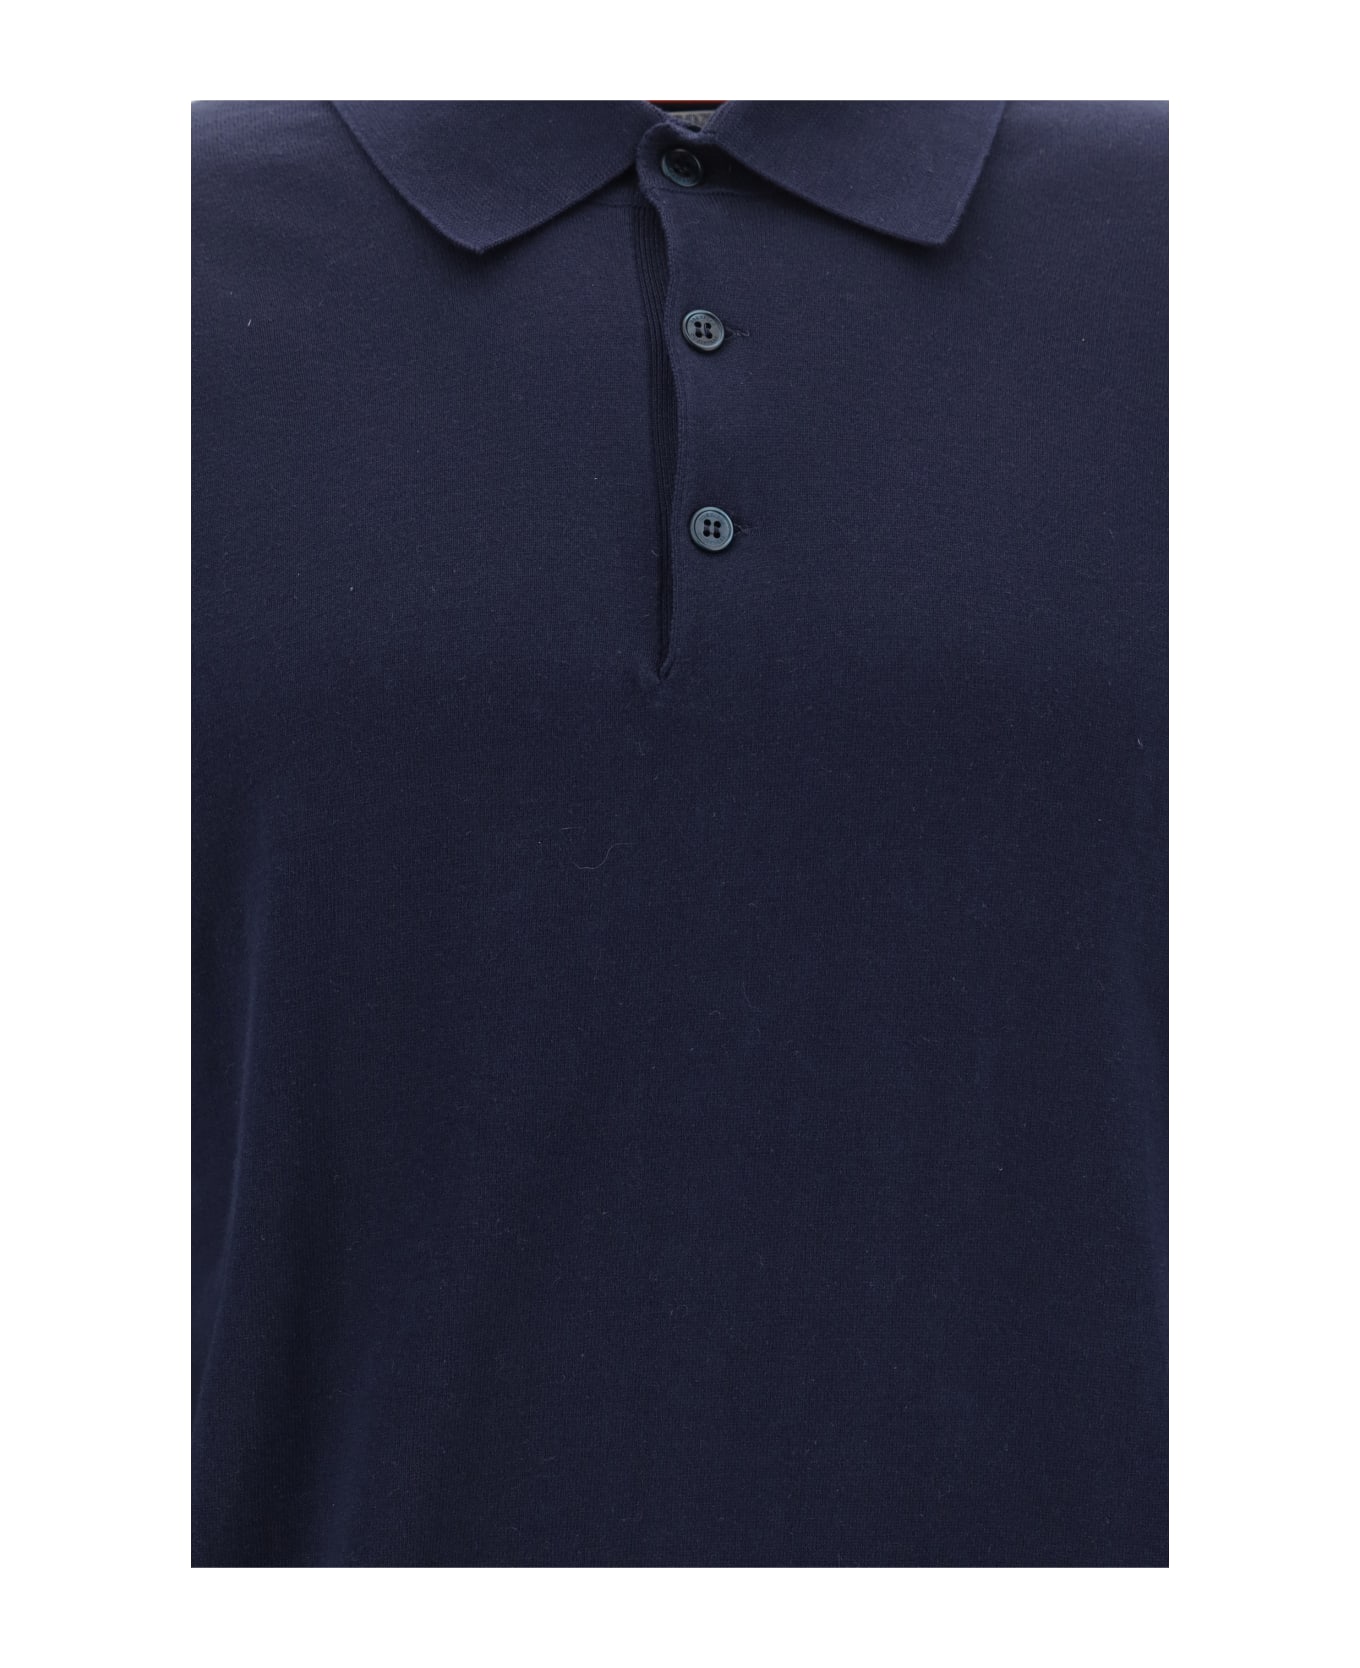 Brunello Cucinelli Long Sleeve Jersey - Navy+grigio Scuro ポロシャツ